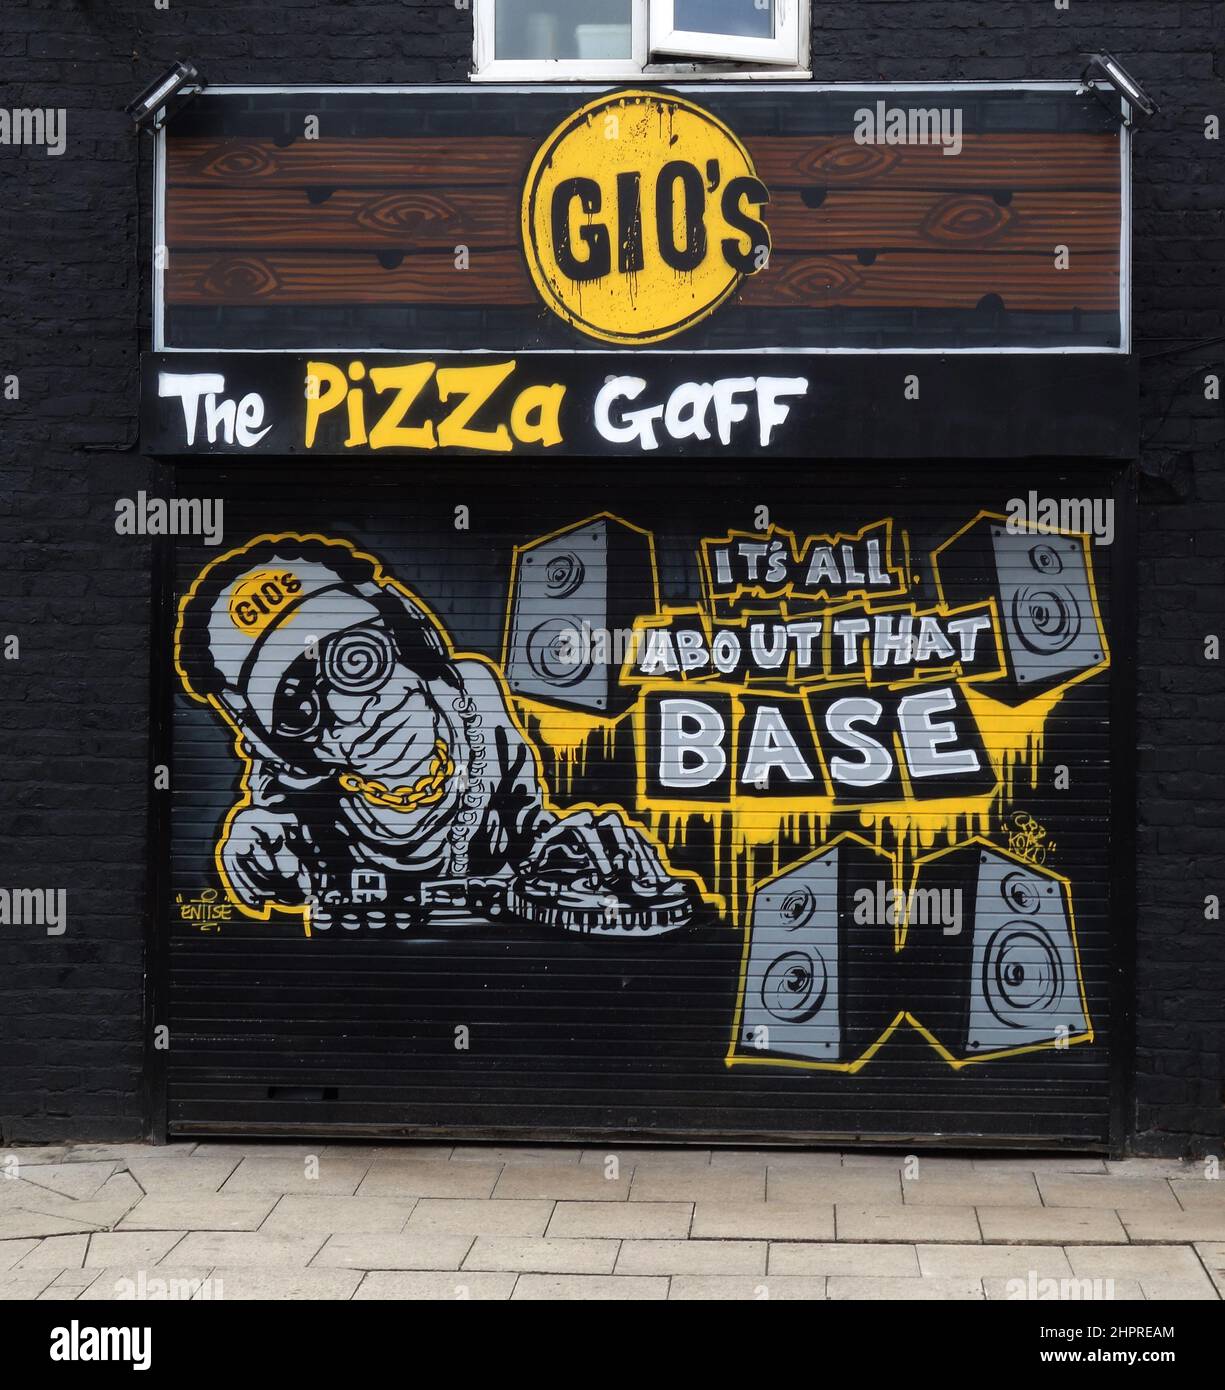 Graffiti style artwork promoting a pizza takeaway. Stock Photo